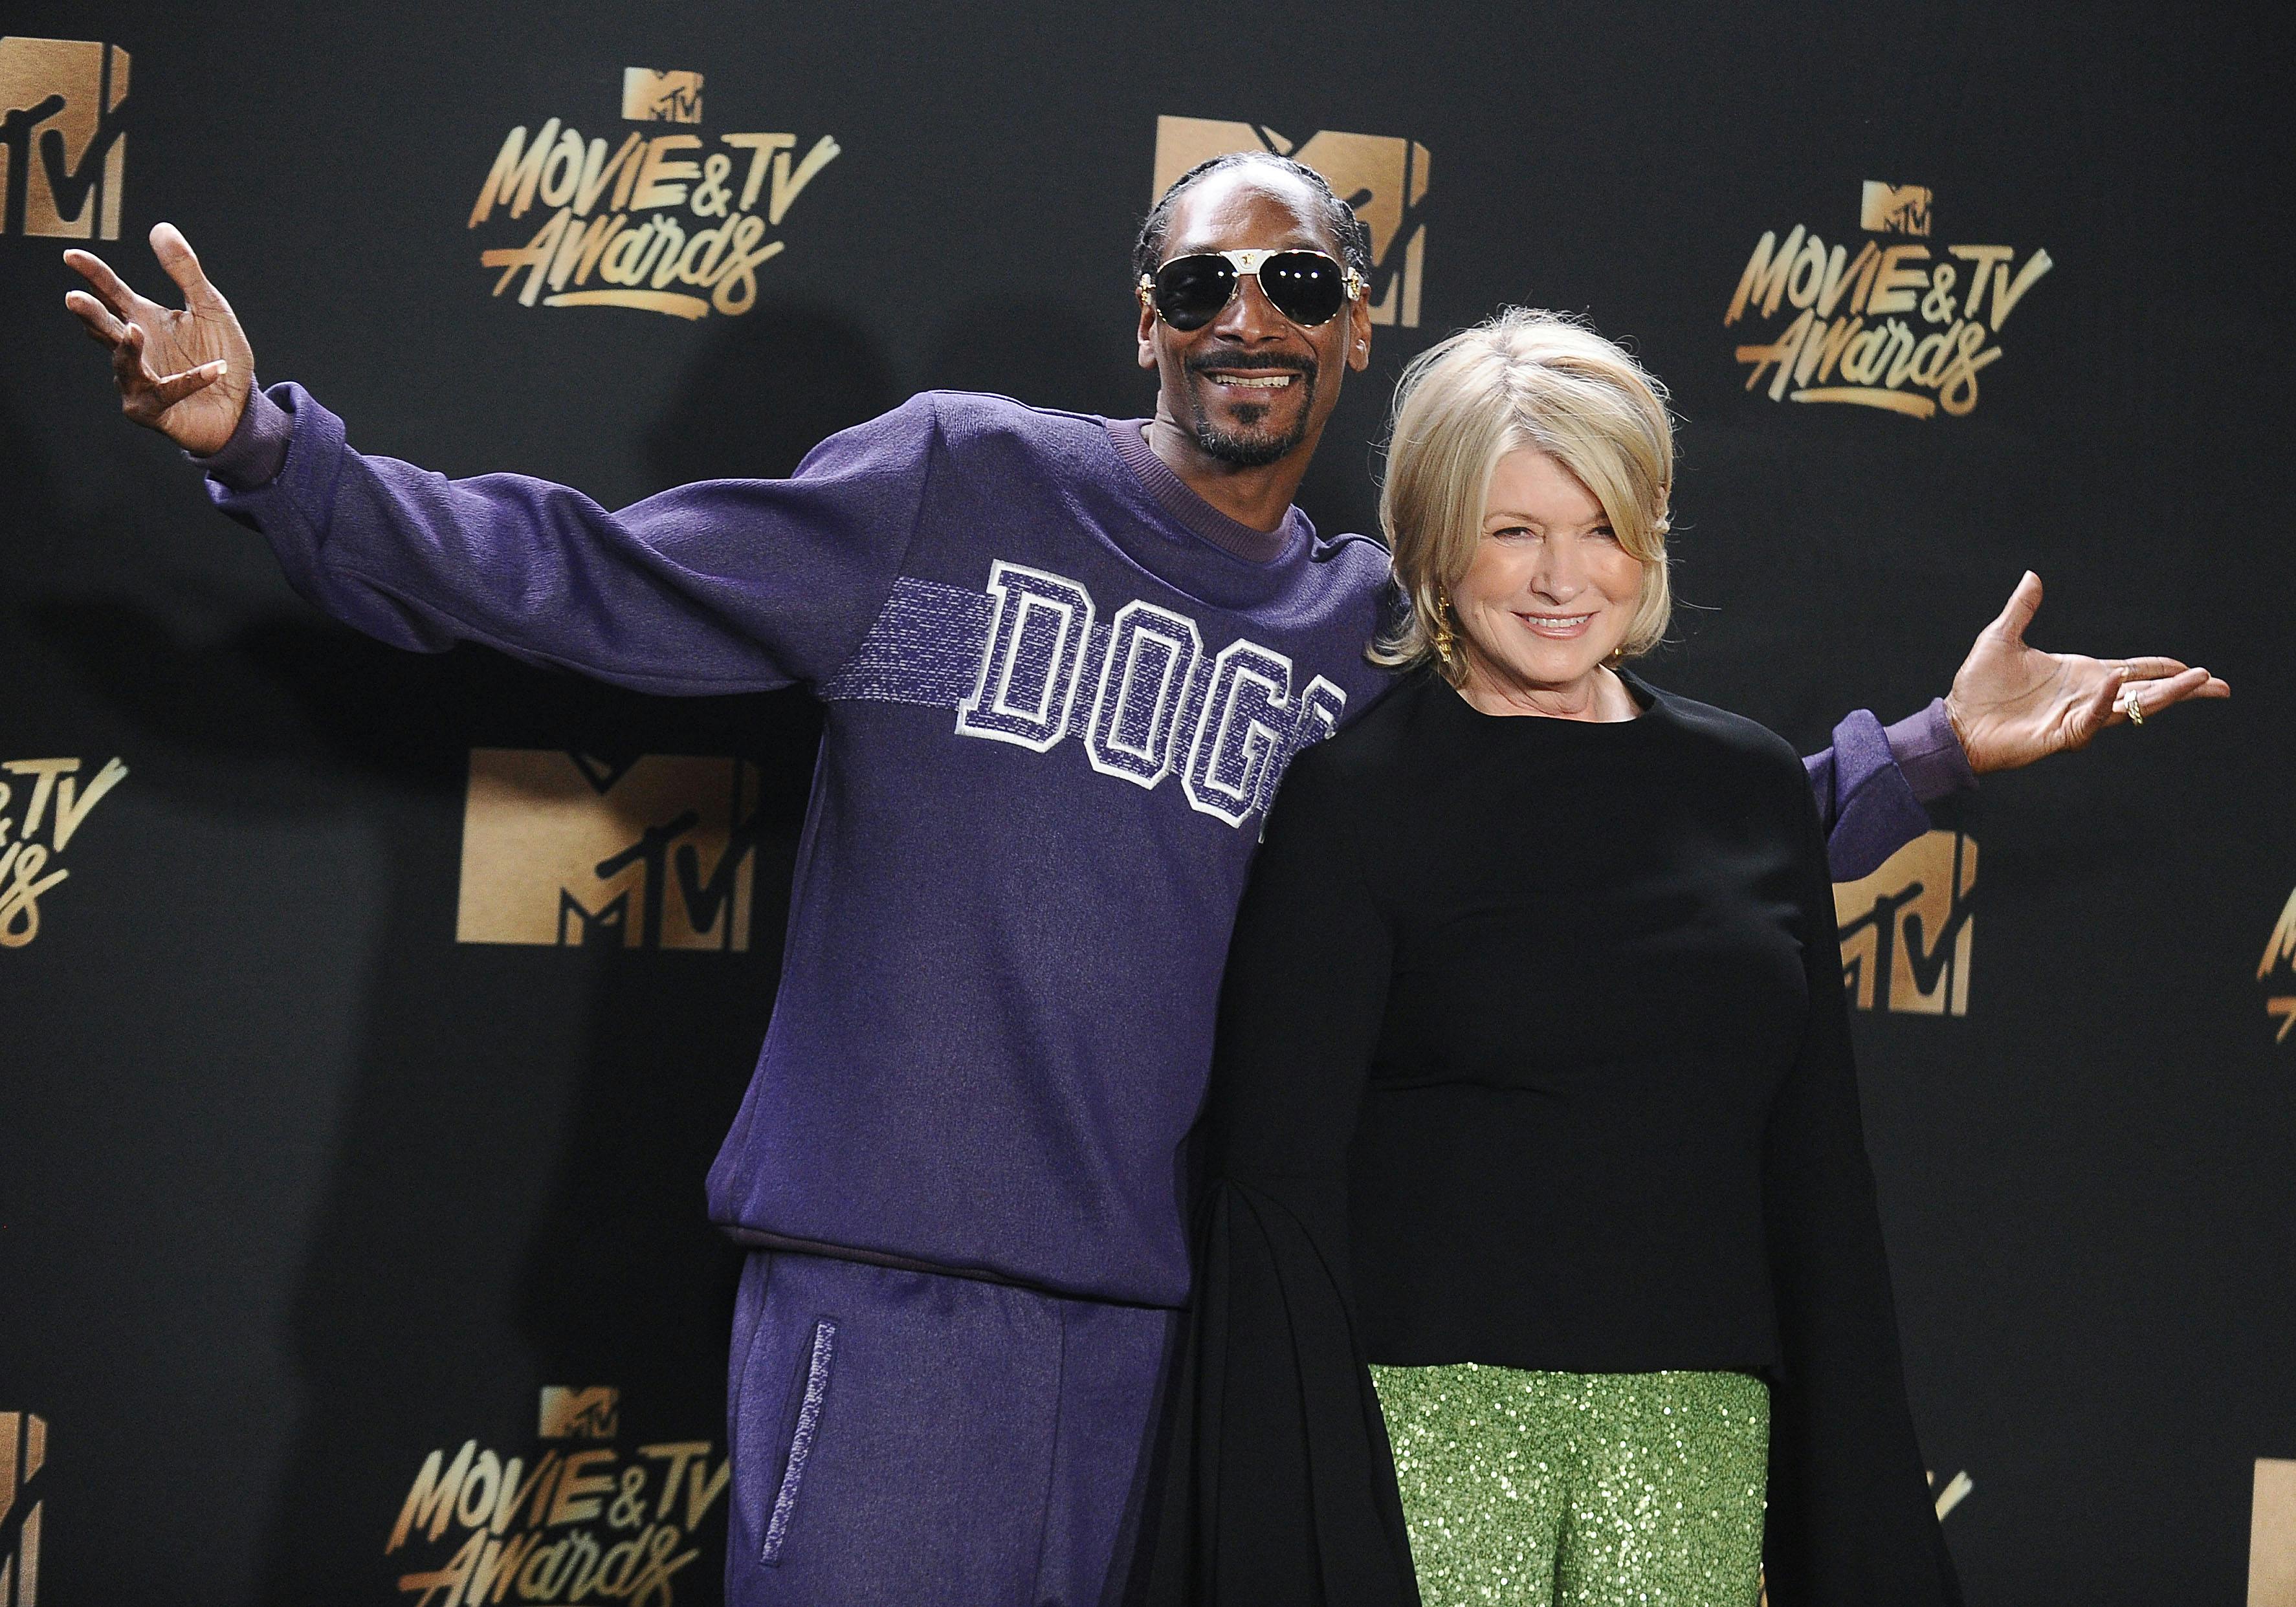 Martha Stewart and Snoop Dogg pose together